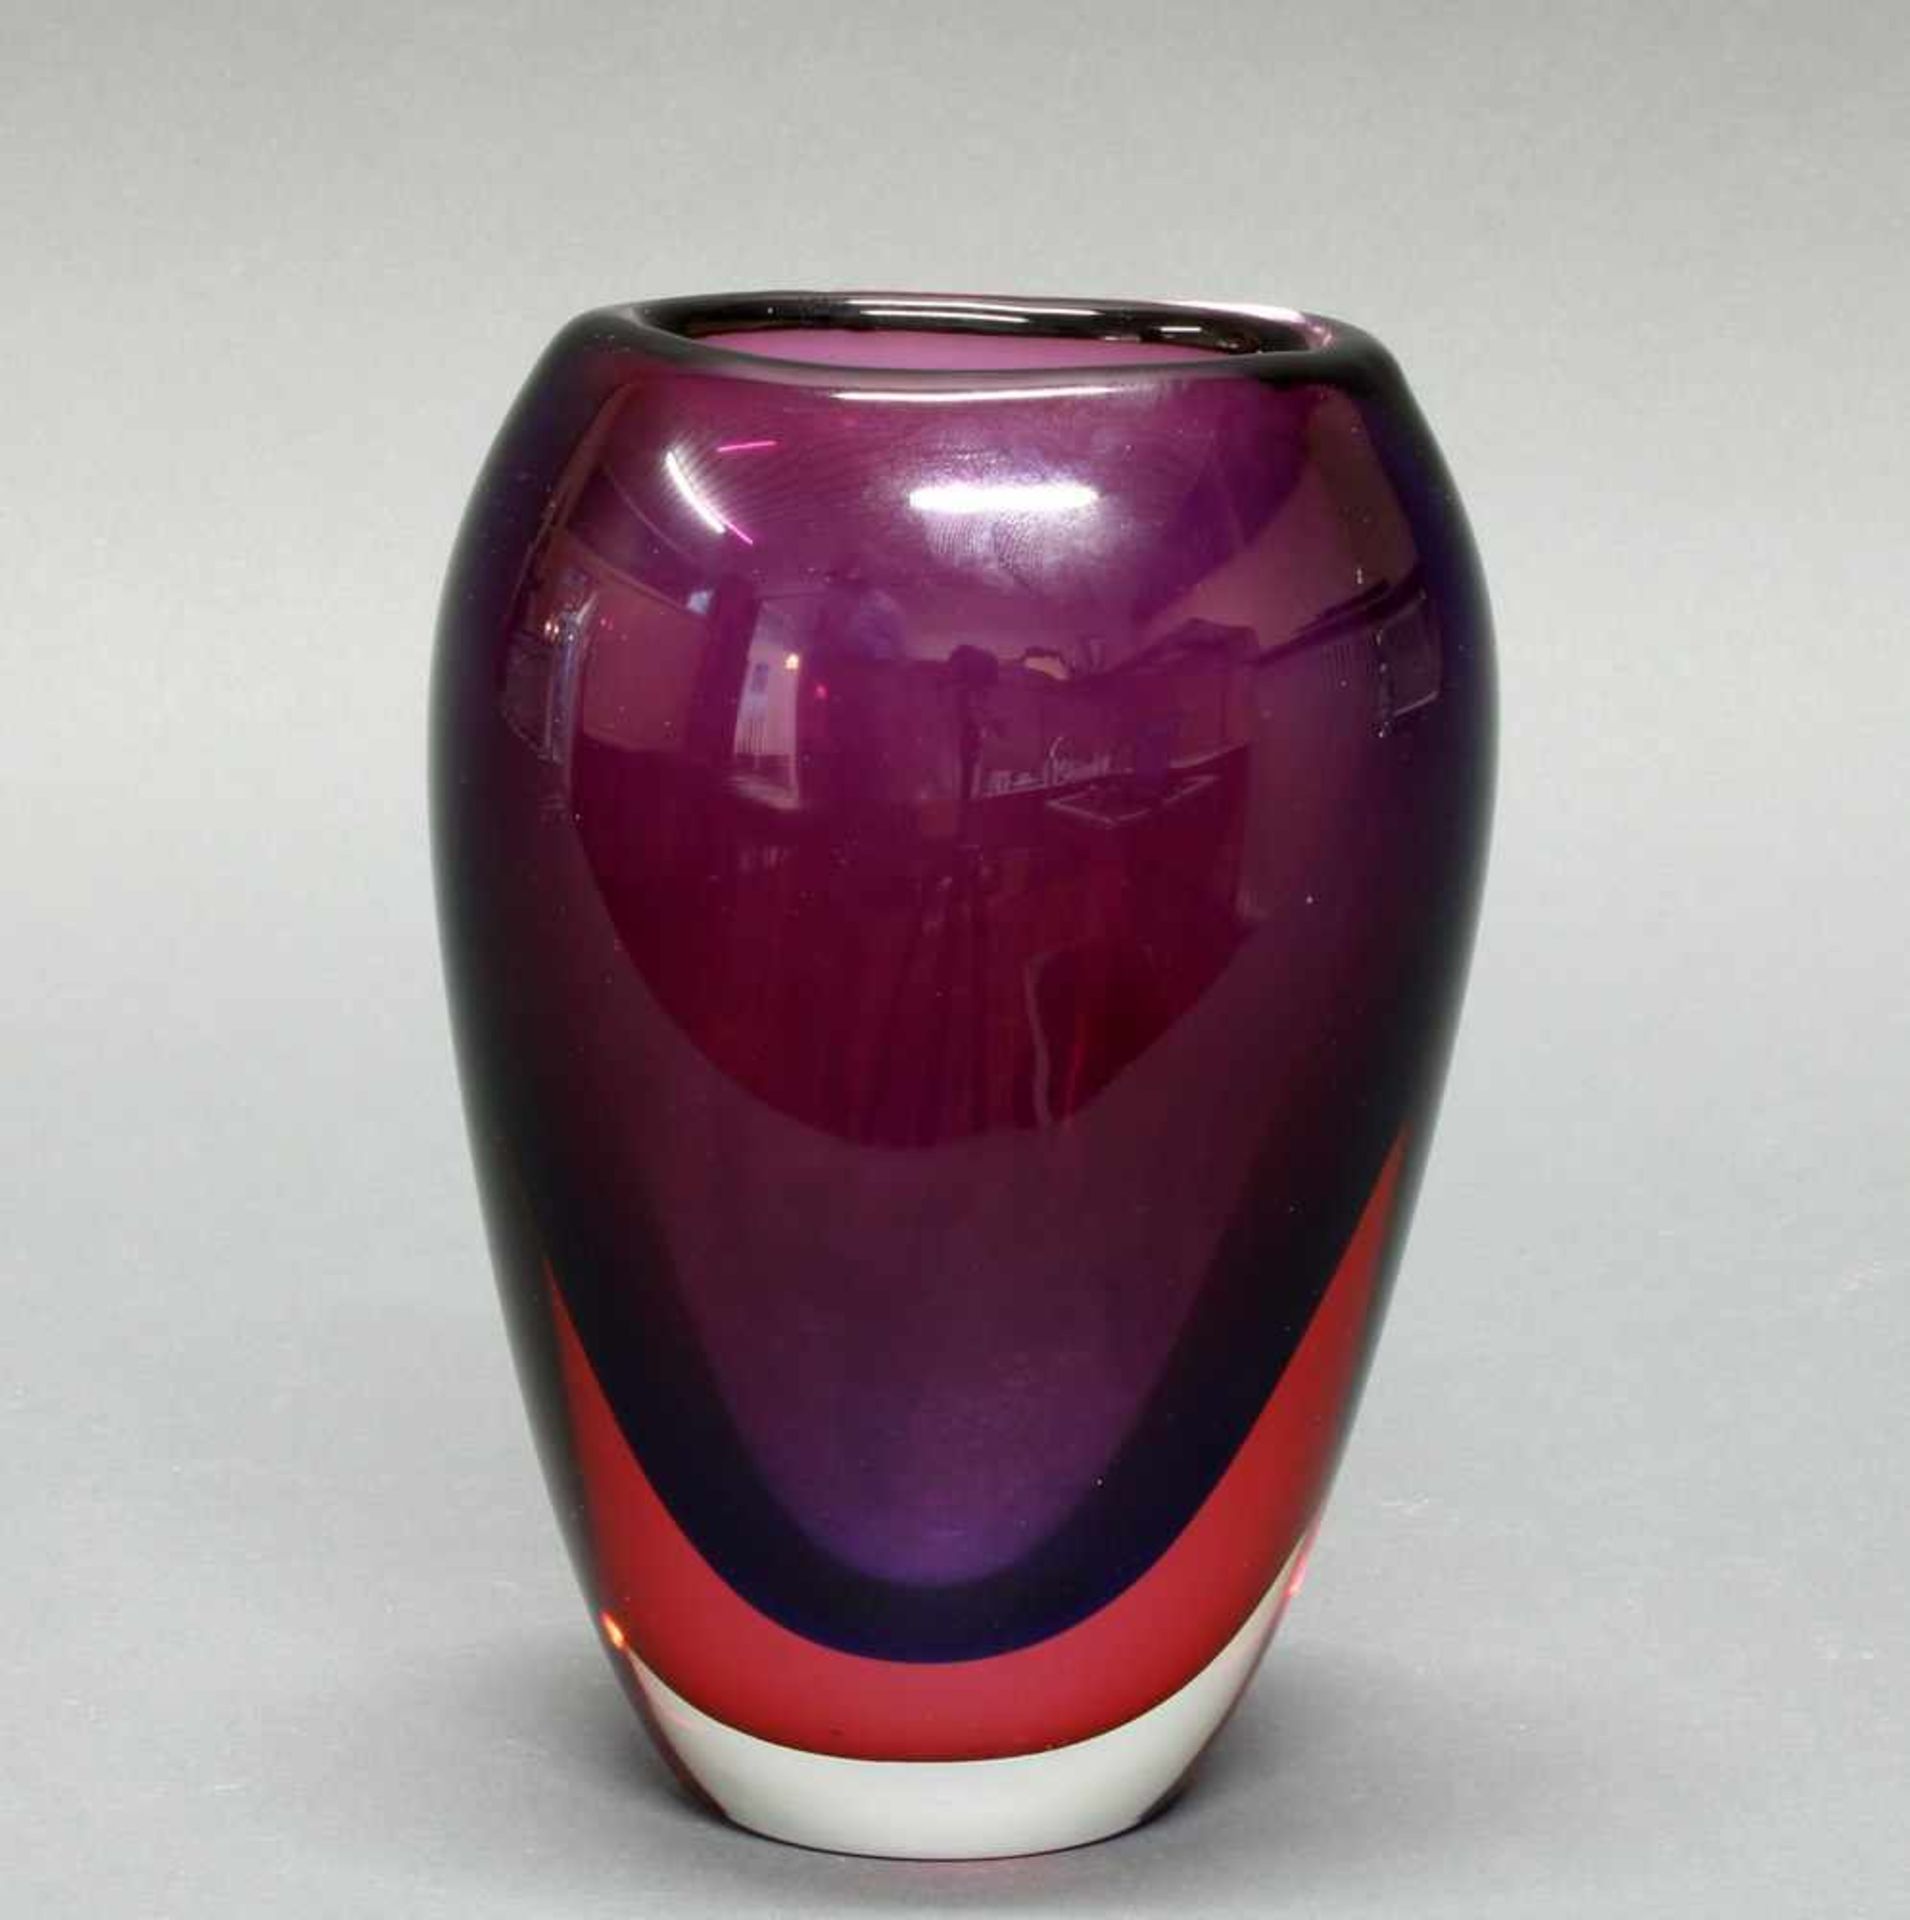 Vase, Murano, um 1963, Archimede Seguso (1909-1999), massives farbloses Glas, rot und violett - Image 2 of 2